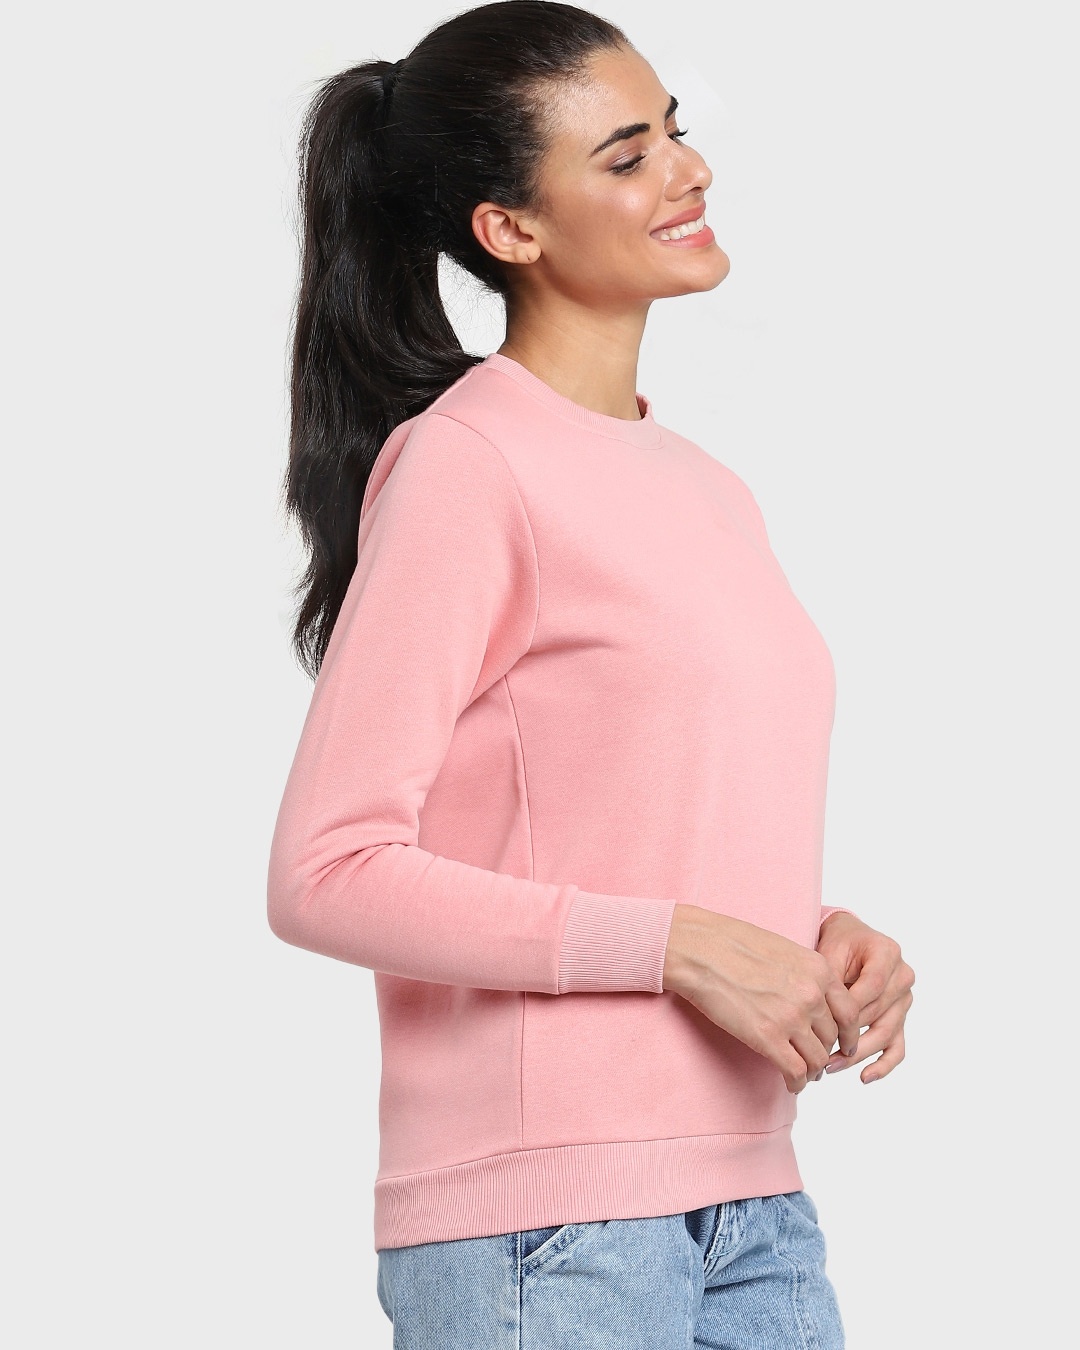 Shop Women's Solid Pink Sweatshirt-Back